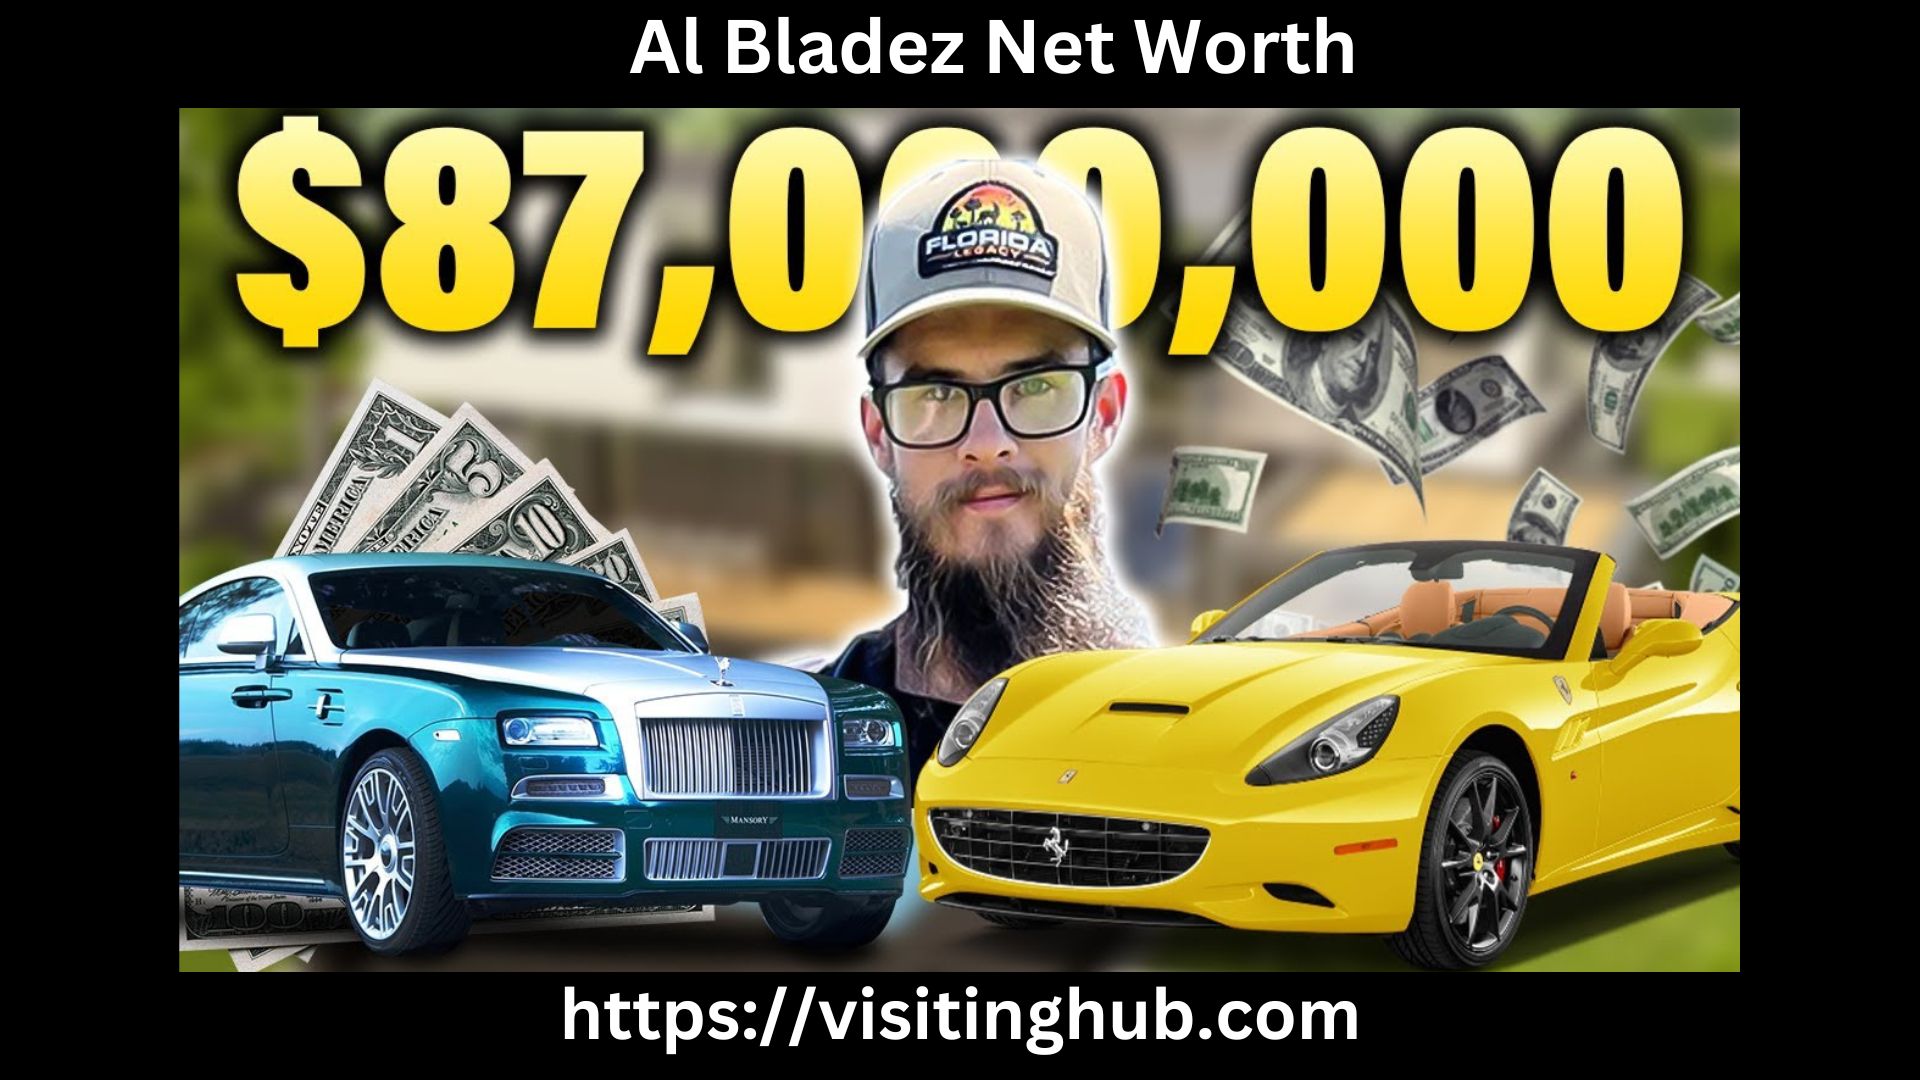 Al Bladez Net Worth